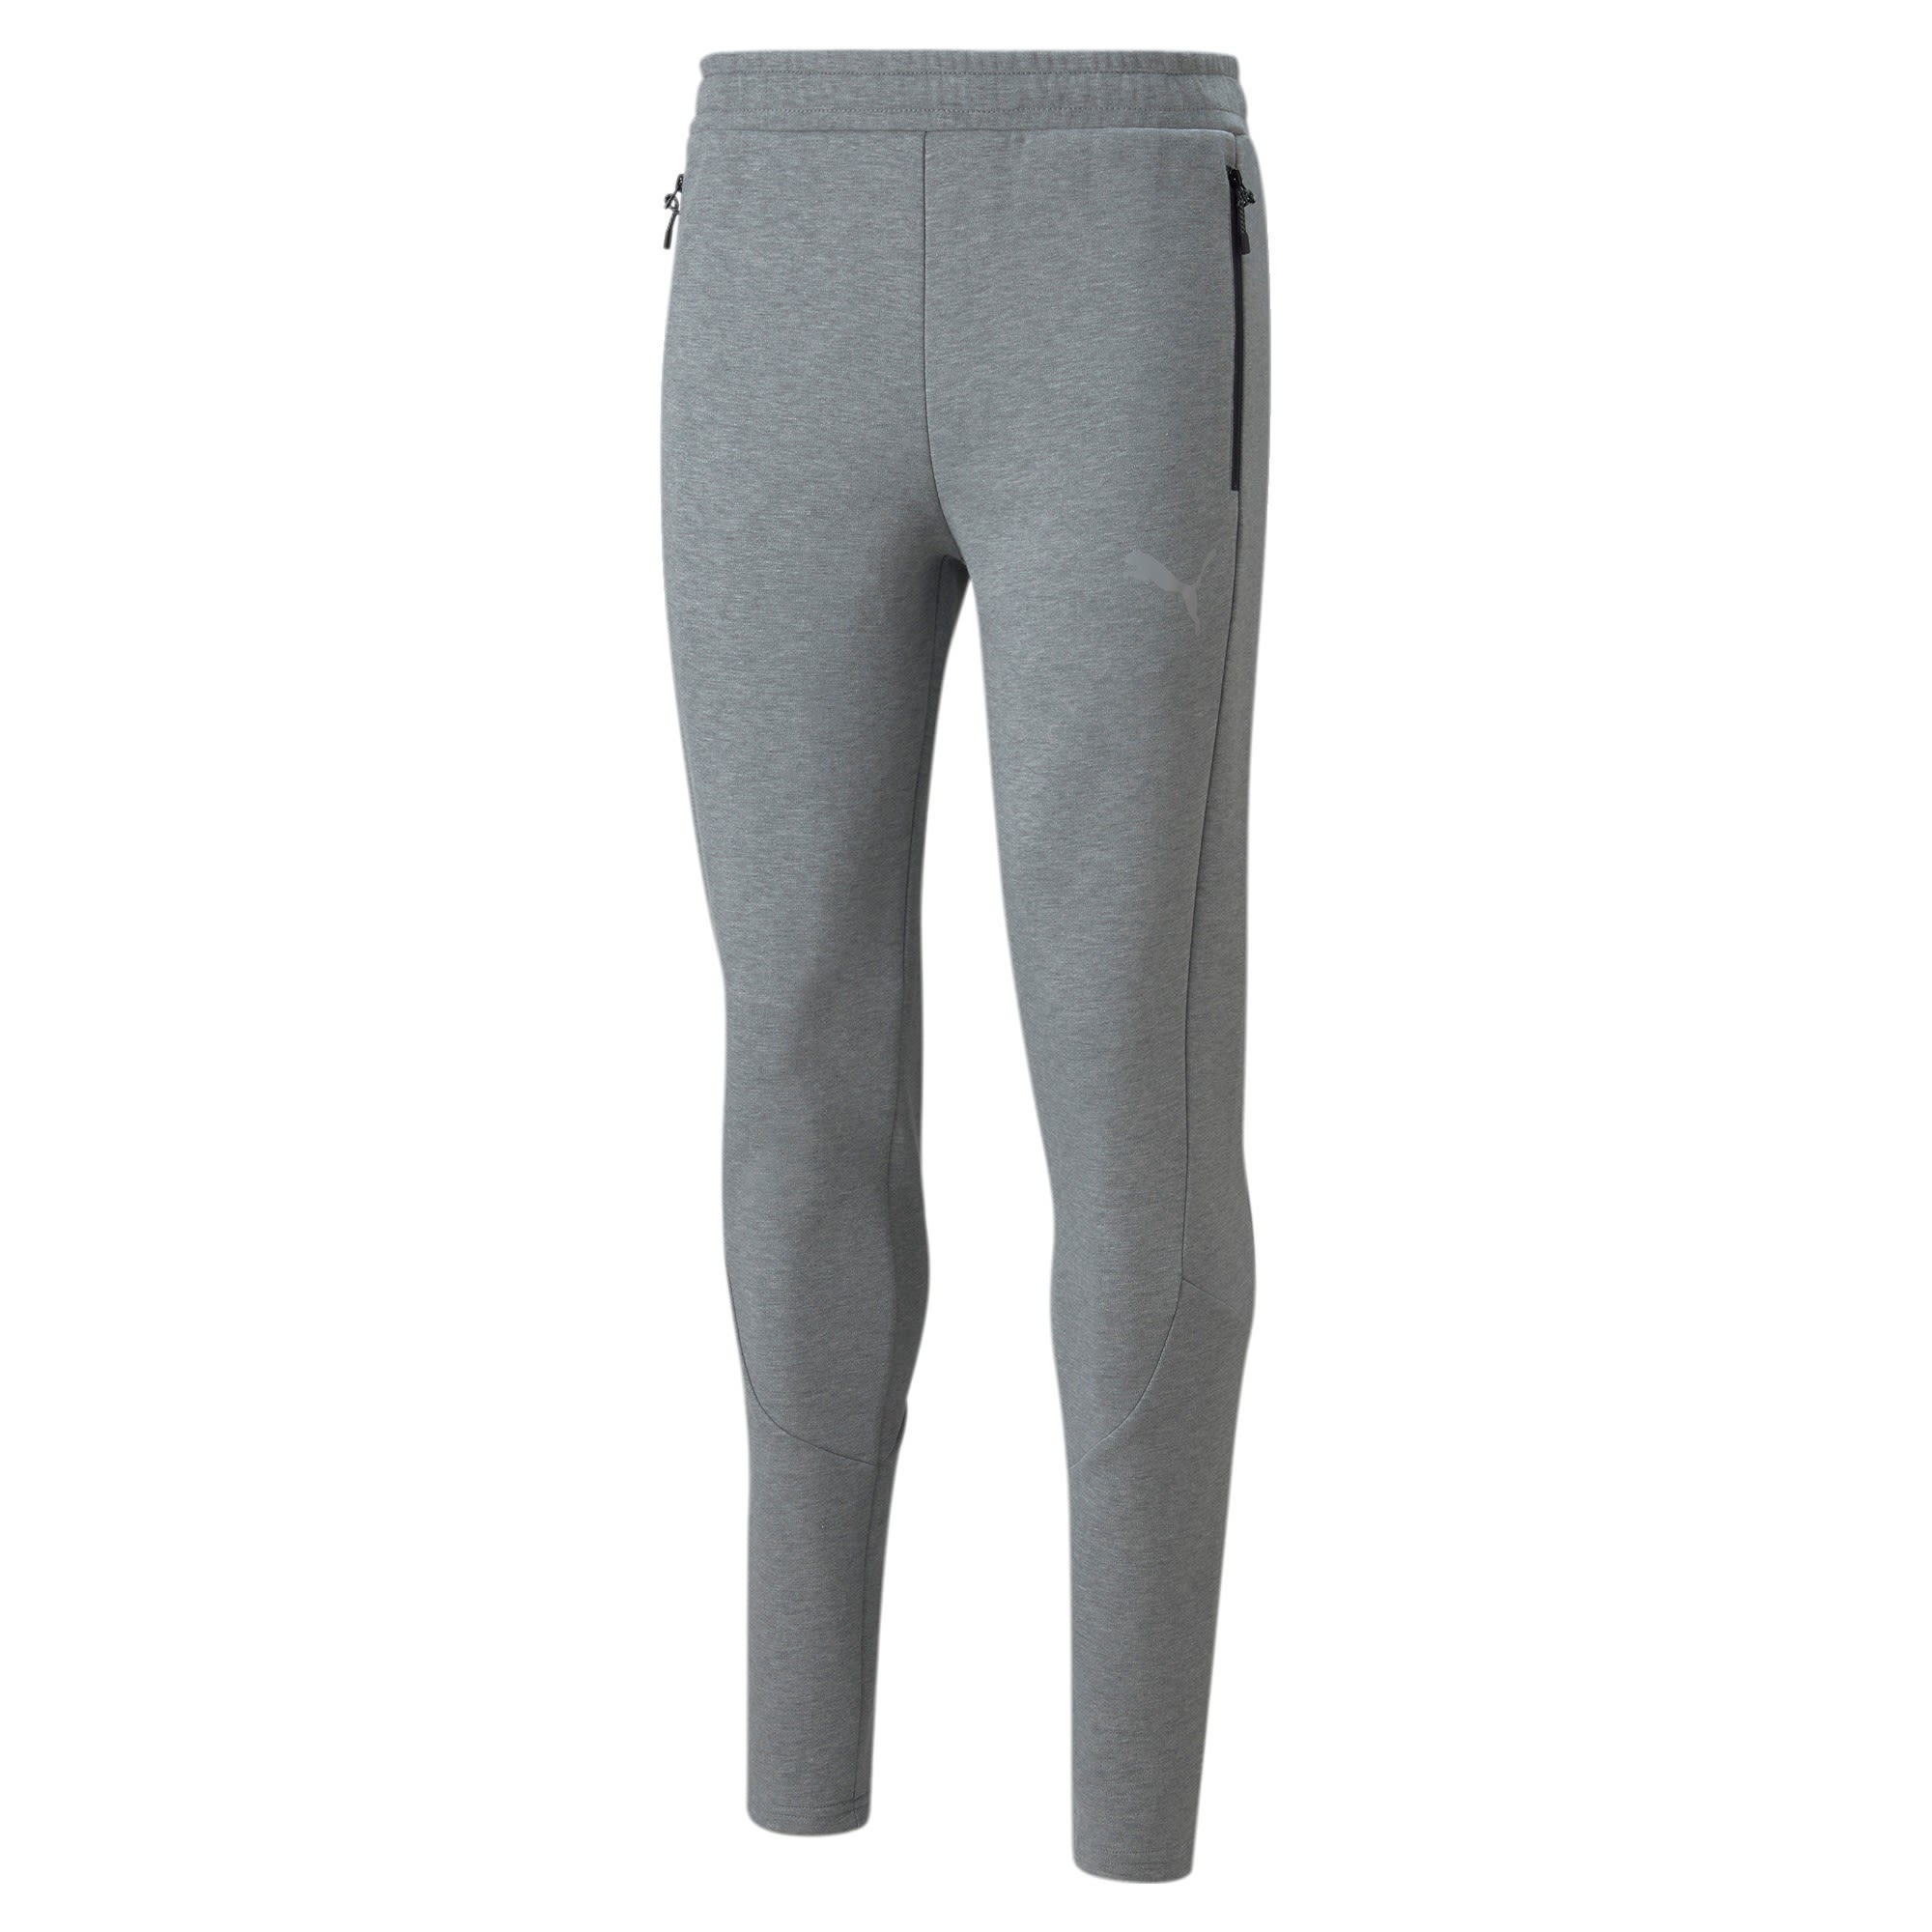 Puma Evostripe Pants Grau- Male Softshellhosen- Grsse M - Farbe Medium Gray Heather